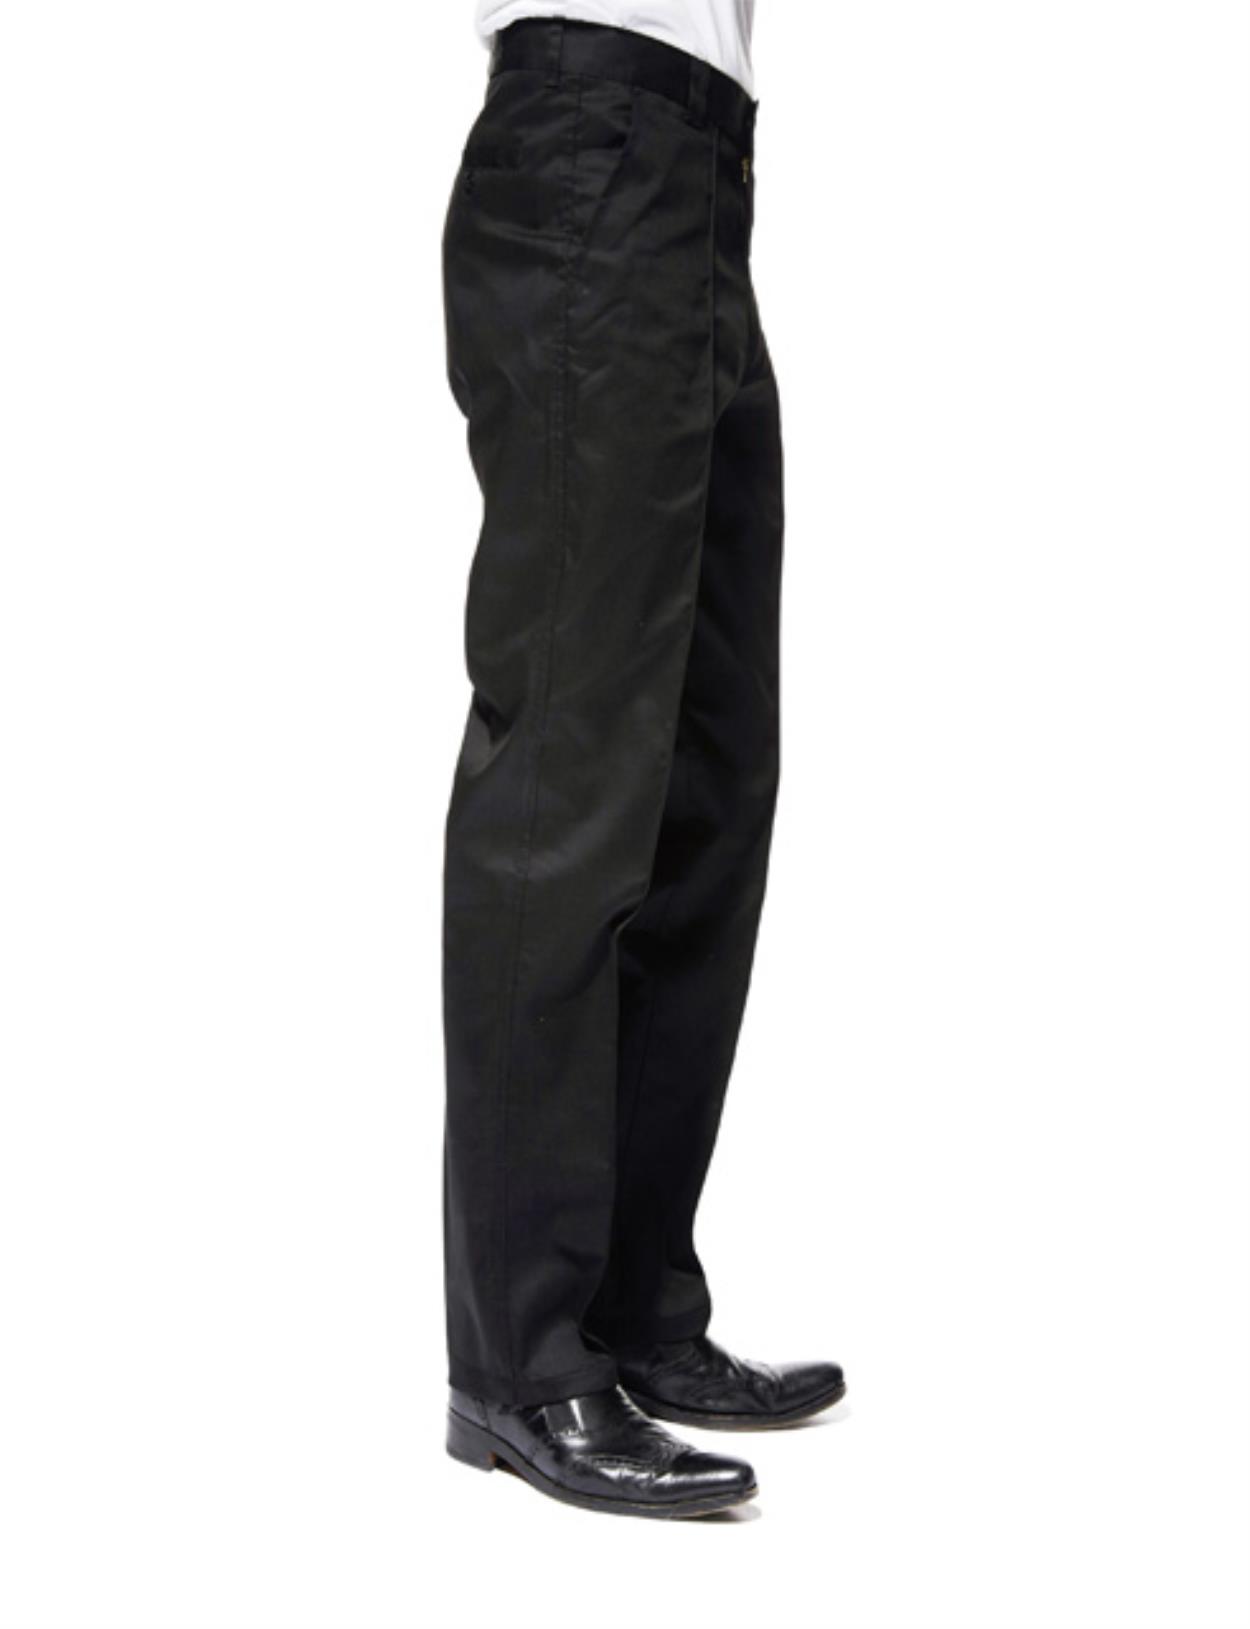 UC901 Workwear Trouser Image 1